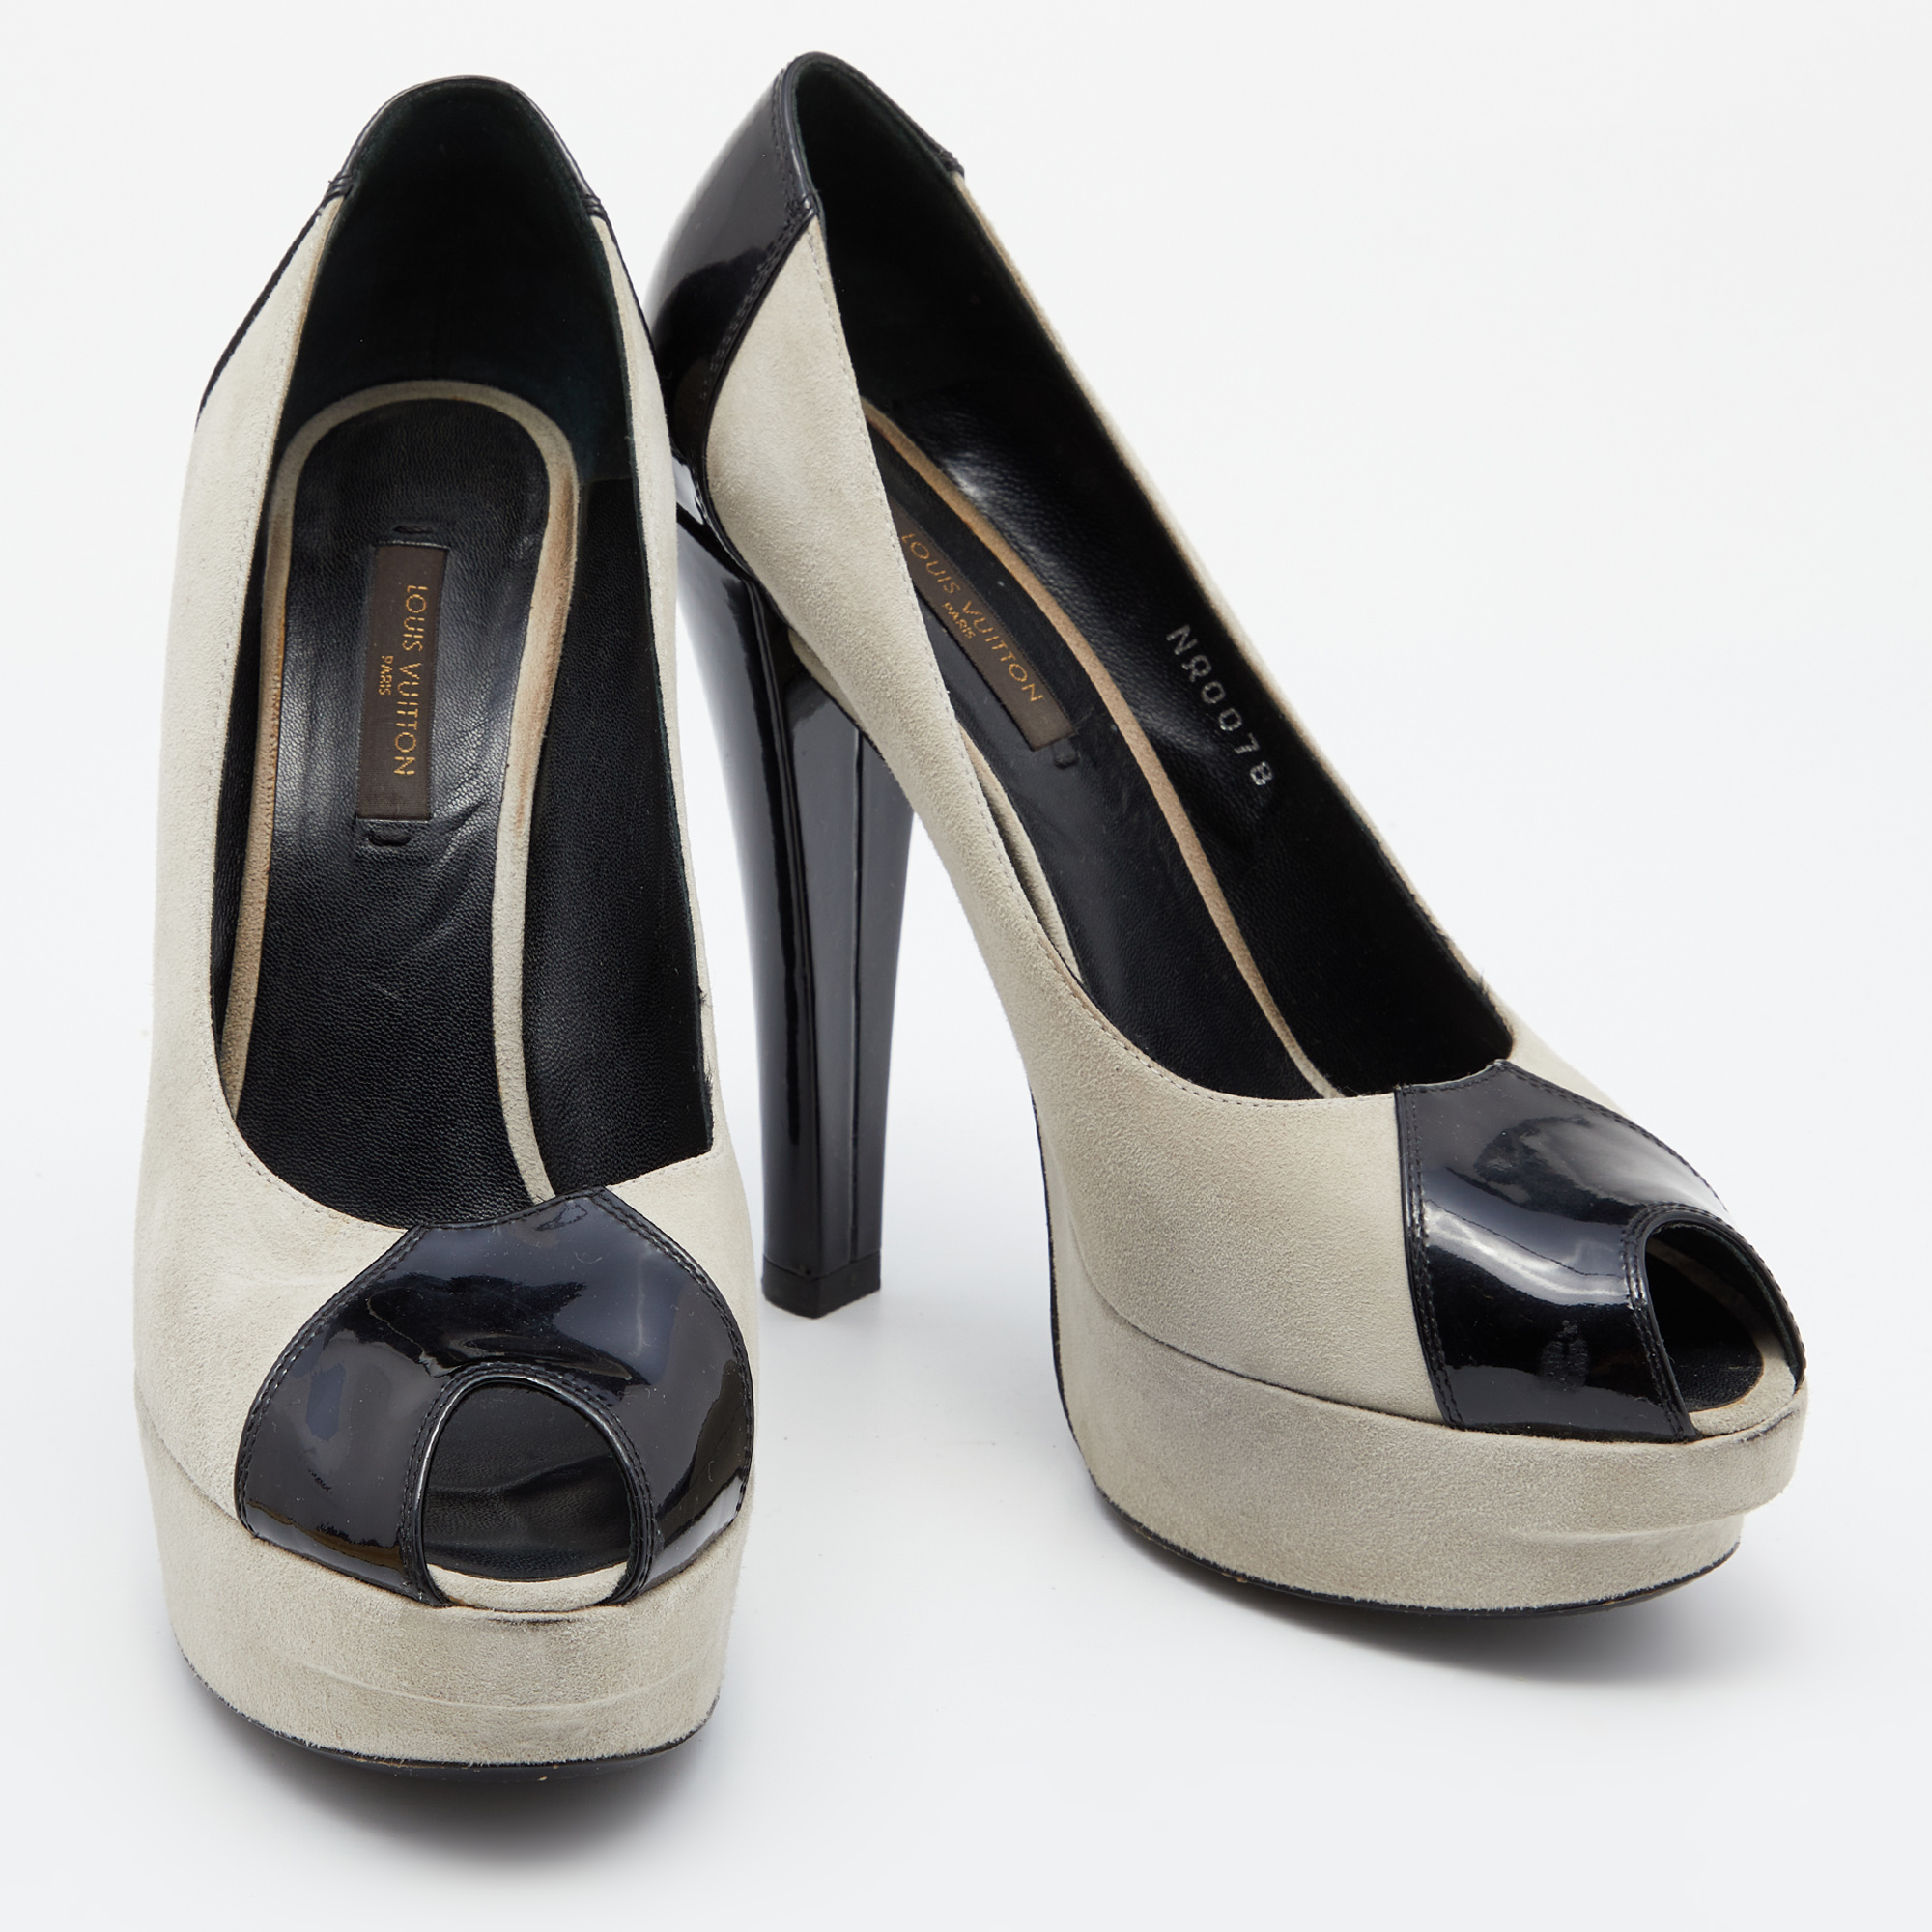 Louis Vuitton Grey/Black Suede And Patent Leather Peep Toe Platform Pumps Size 37